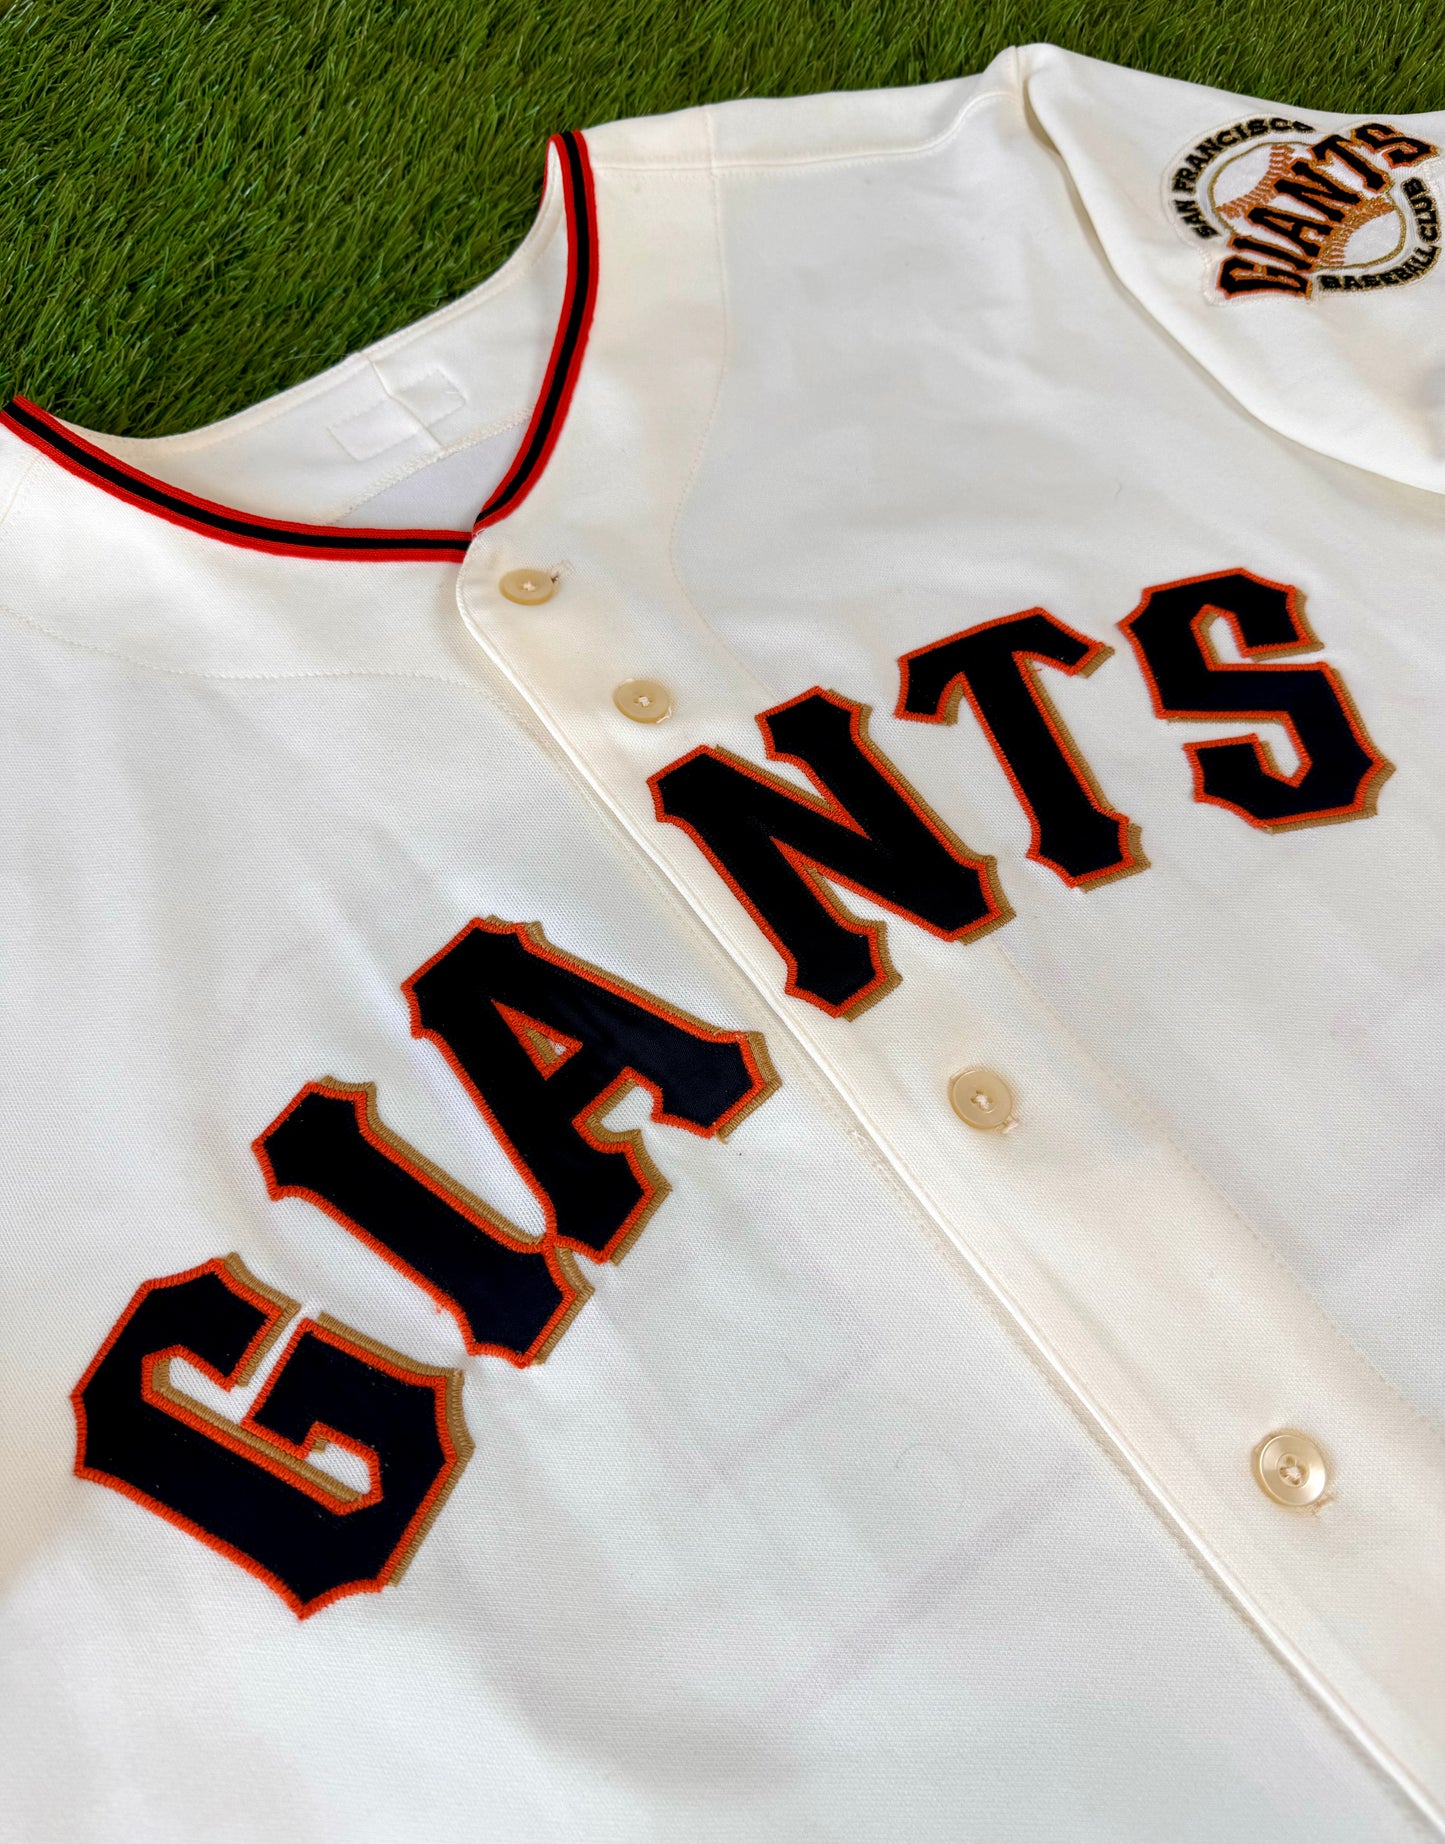 San Francisco Giants 2008-2014 Pablo Sandoval MLB Baseball Jersey (48/XL)